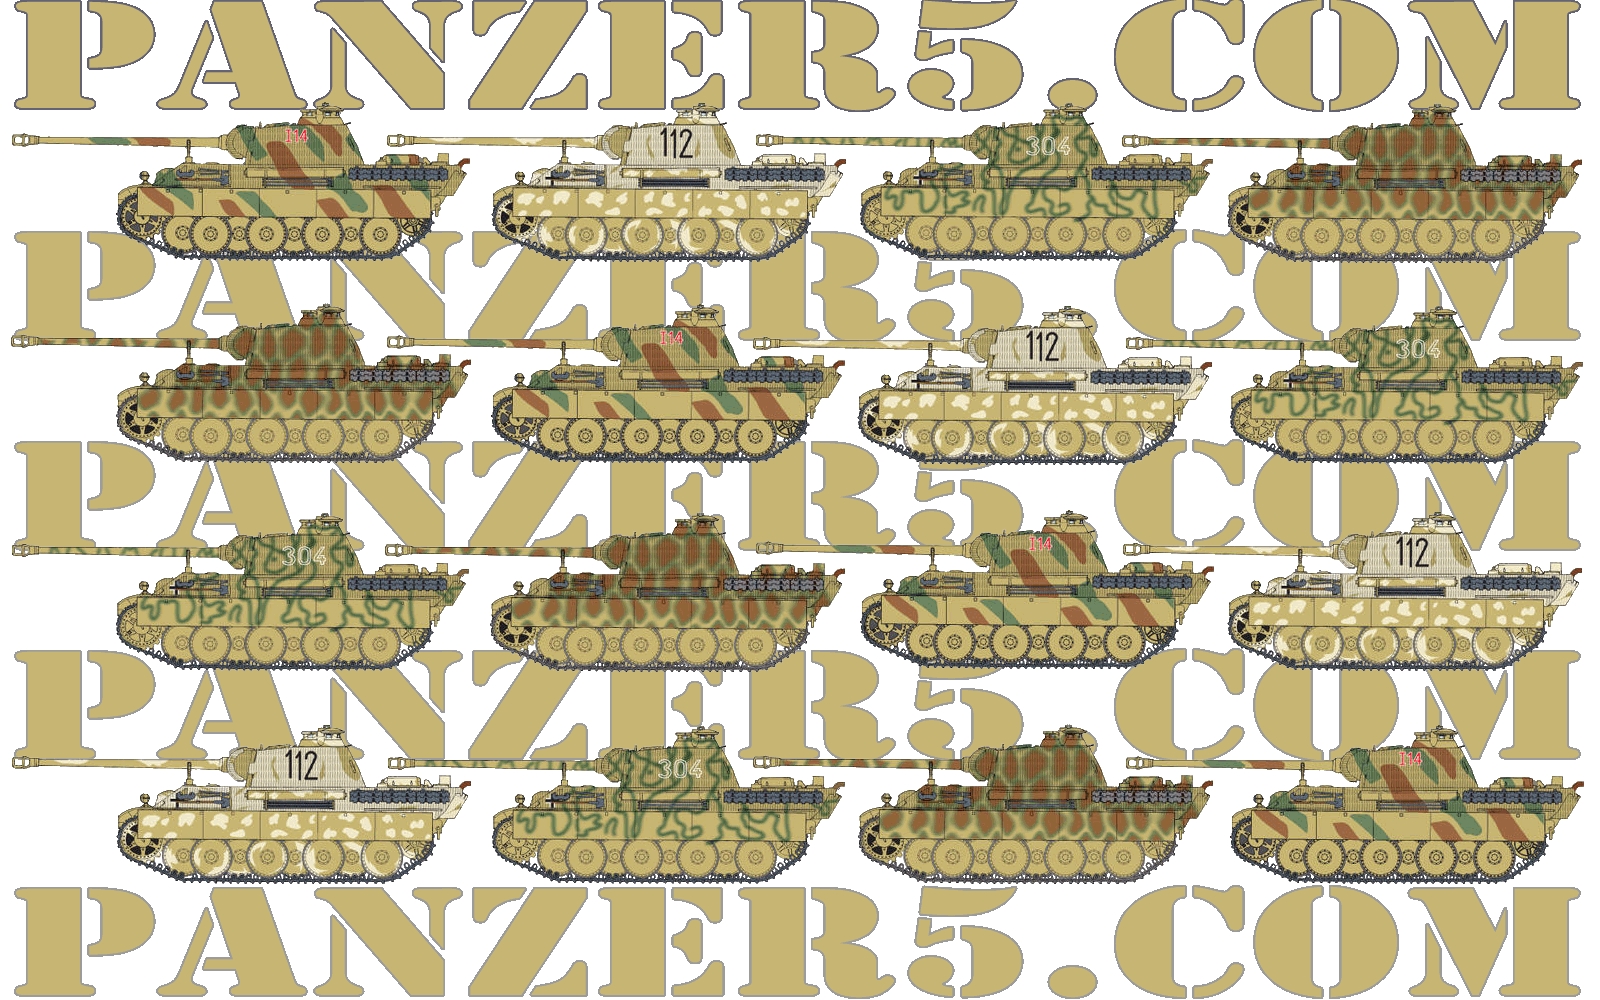 PANZER5.COM - Panzerkampfwagen V Panther - Sd.Kfz. 171